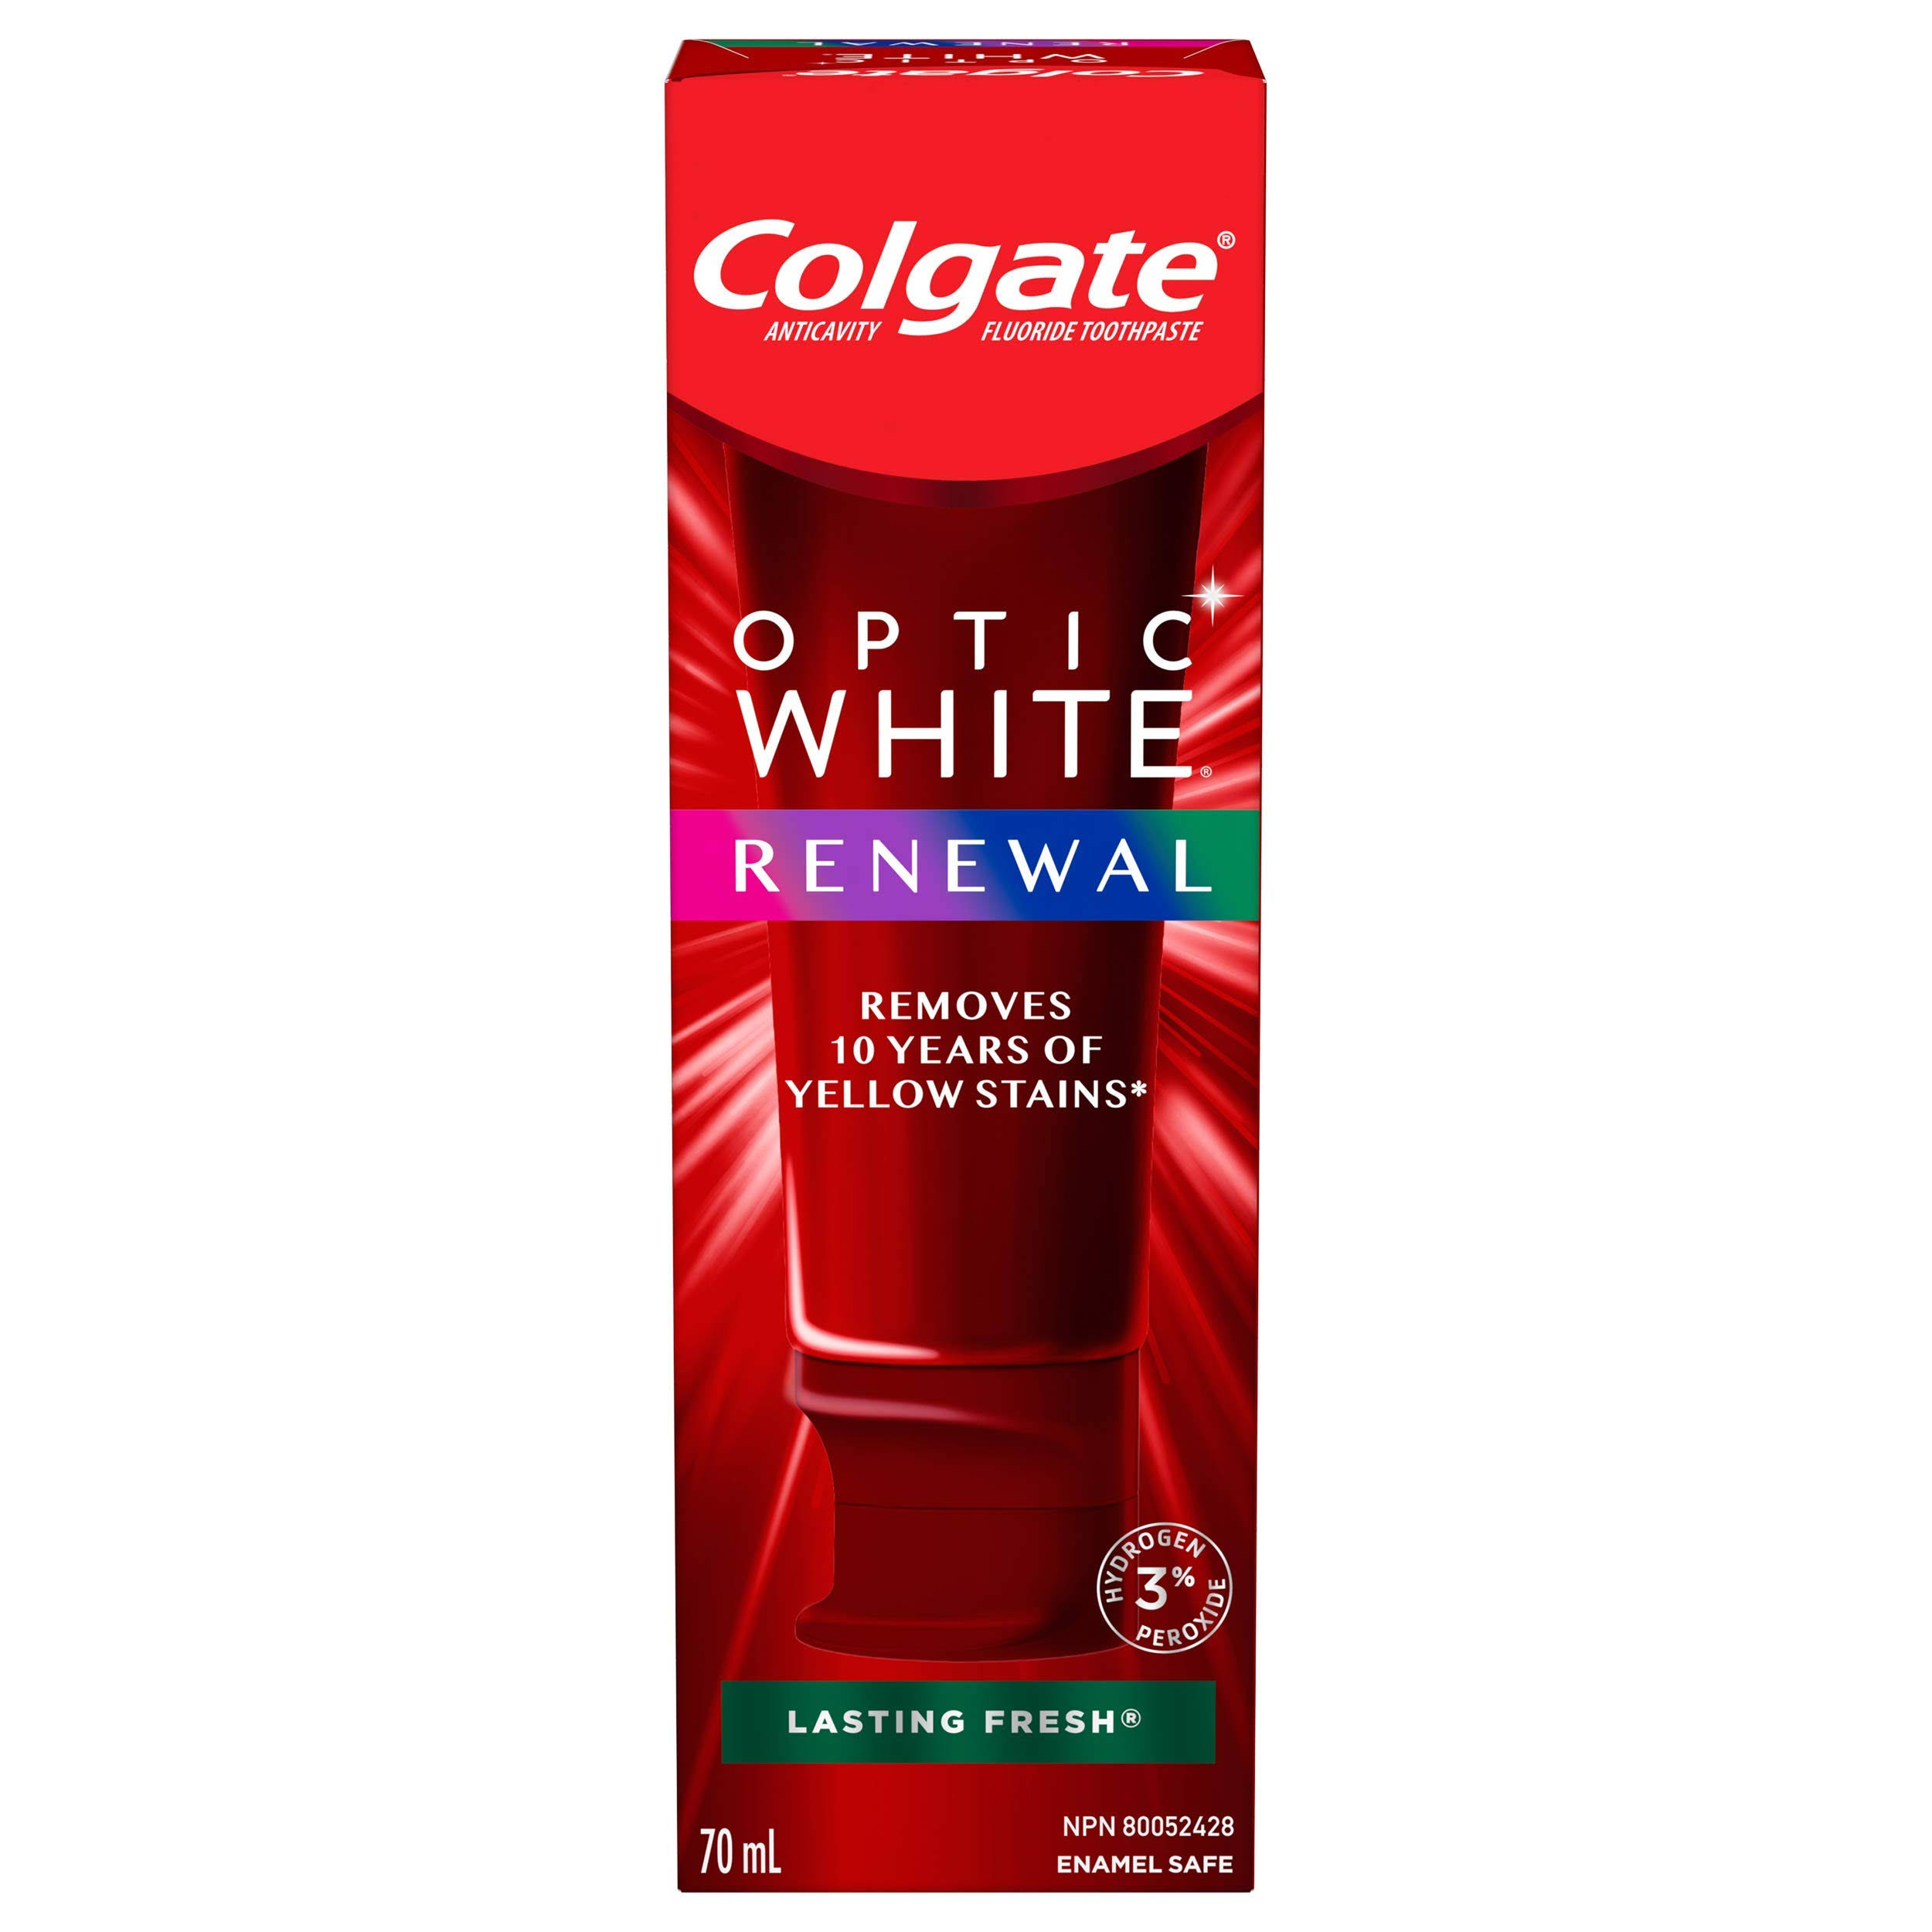 Colgate Optic White Renewal Lasting Fresh Teeth Whitening Toothpaste - 70 Ml